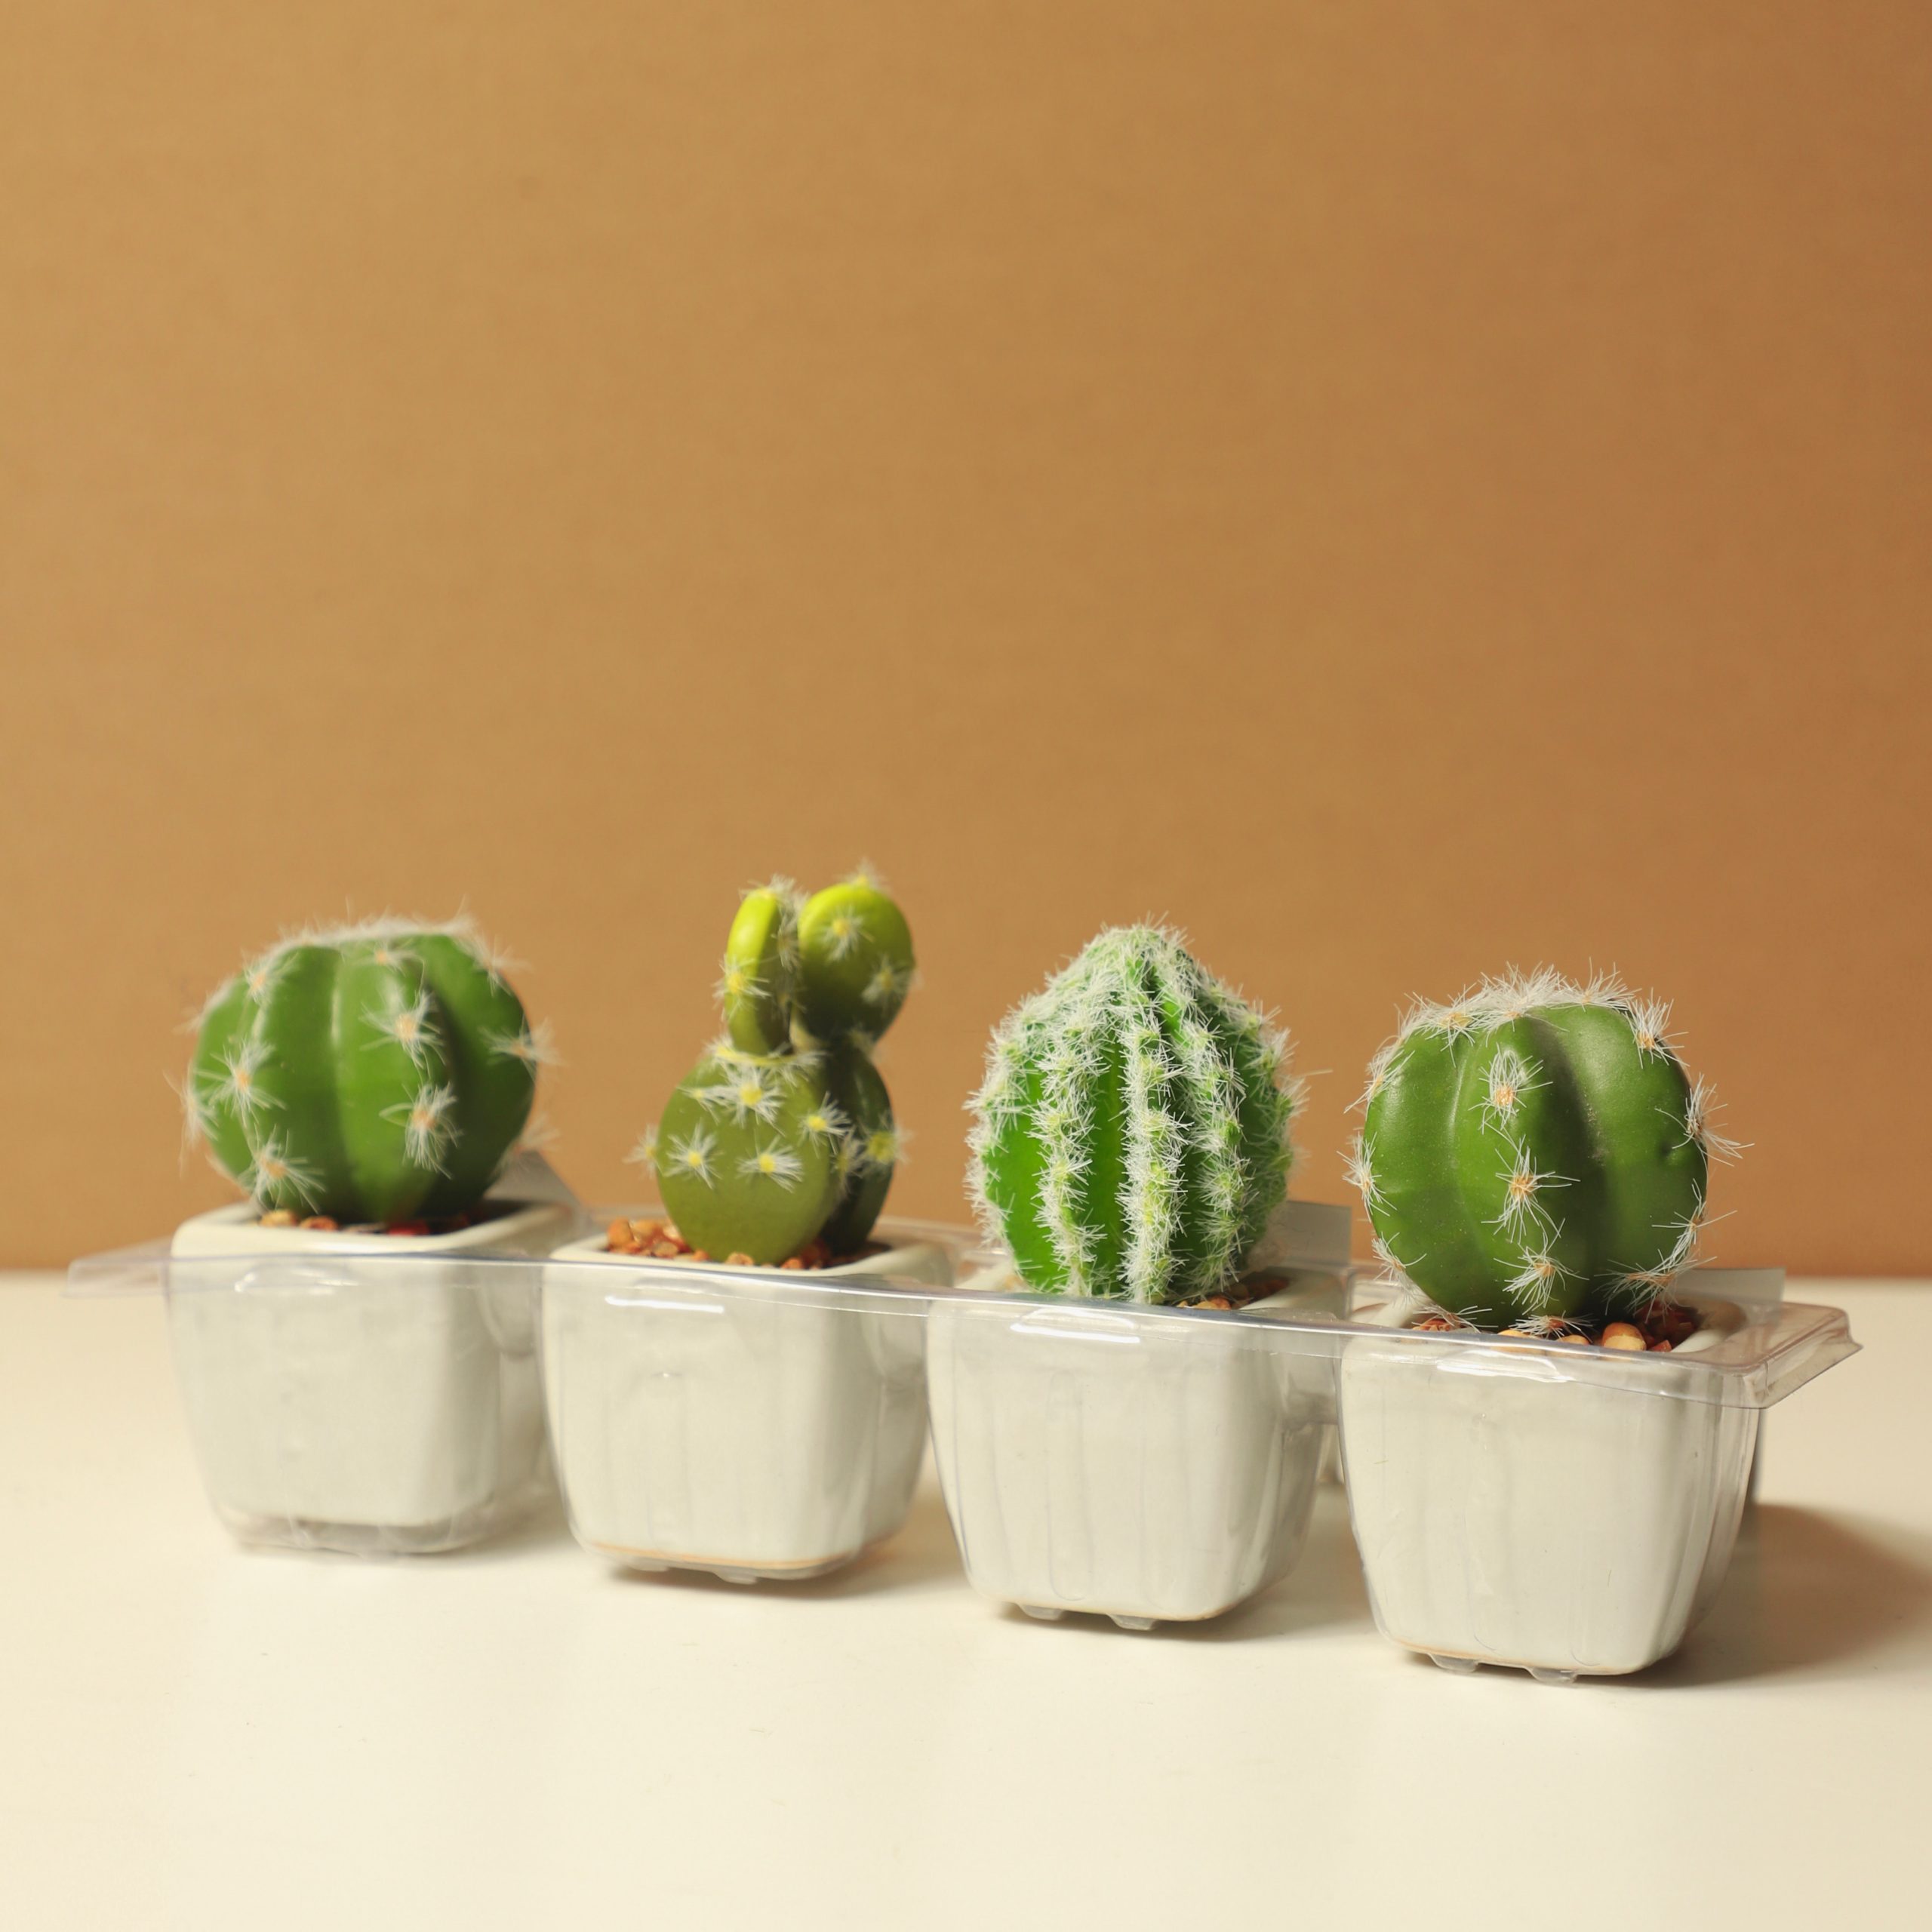 Growing cacti indoors